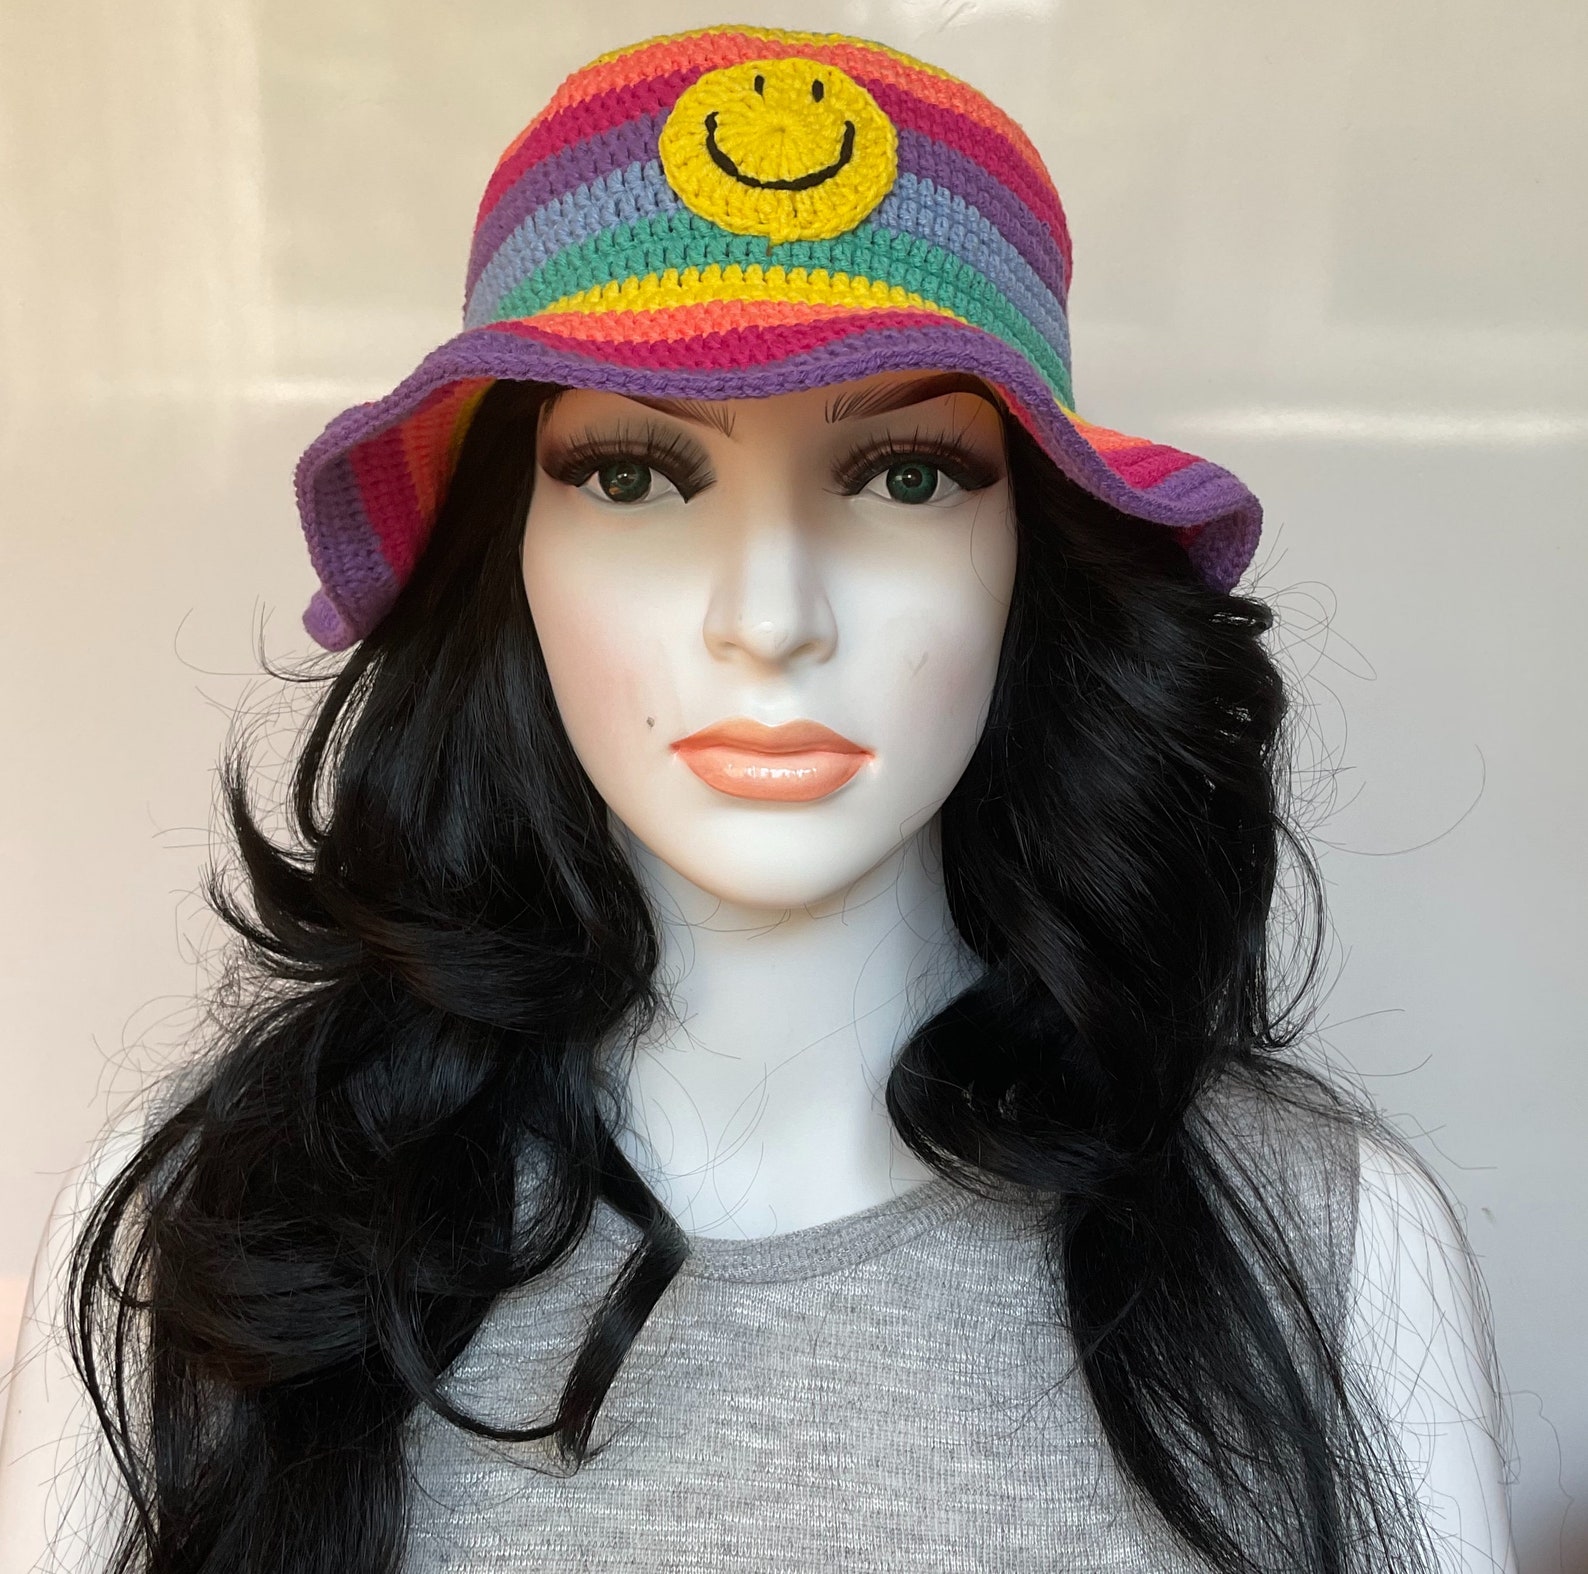 Crochet rainbow hat with smiley crochet bucket hat | Etsy